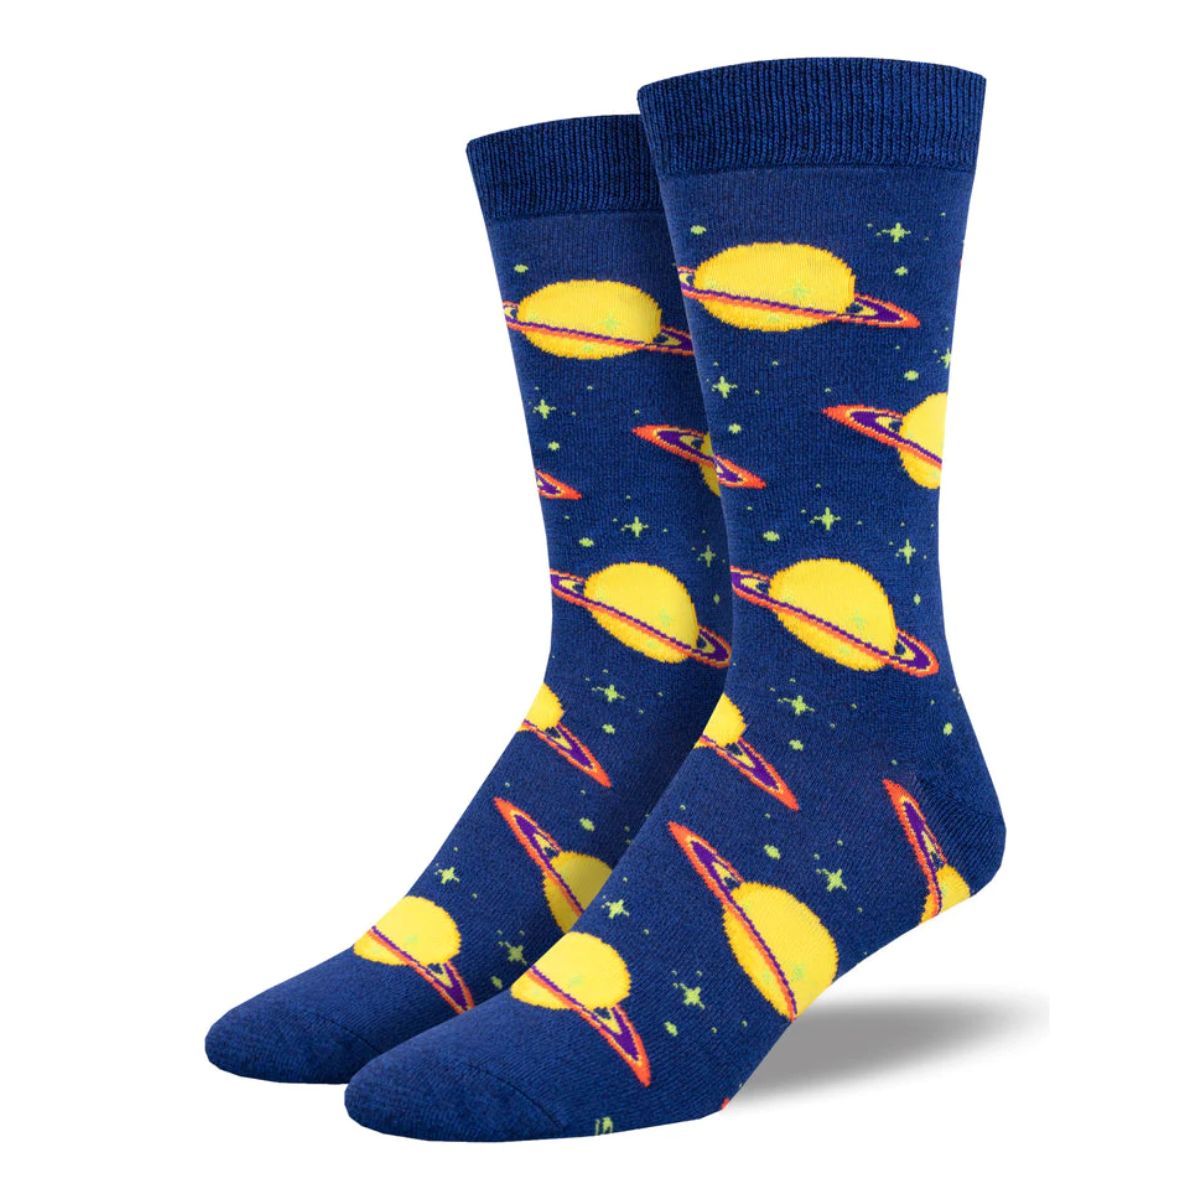 Star struck socks a pair of navy blue socks with planet Saturn print. 